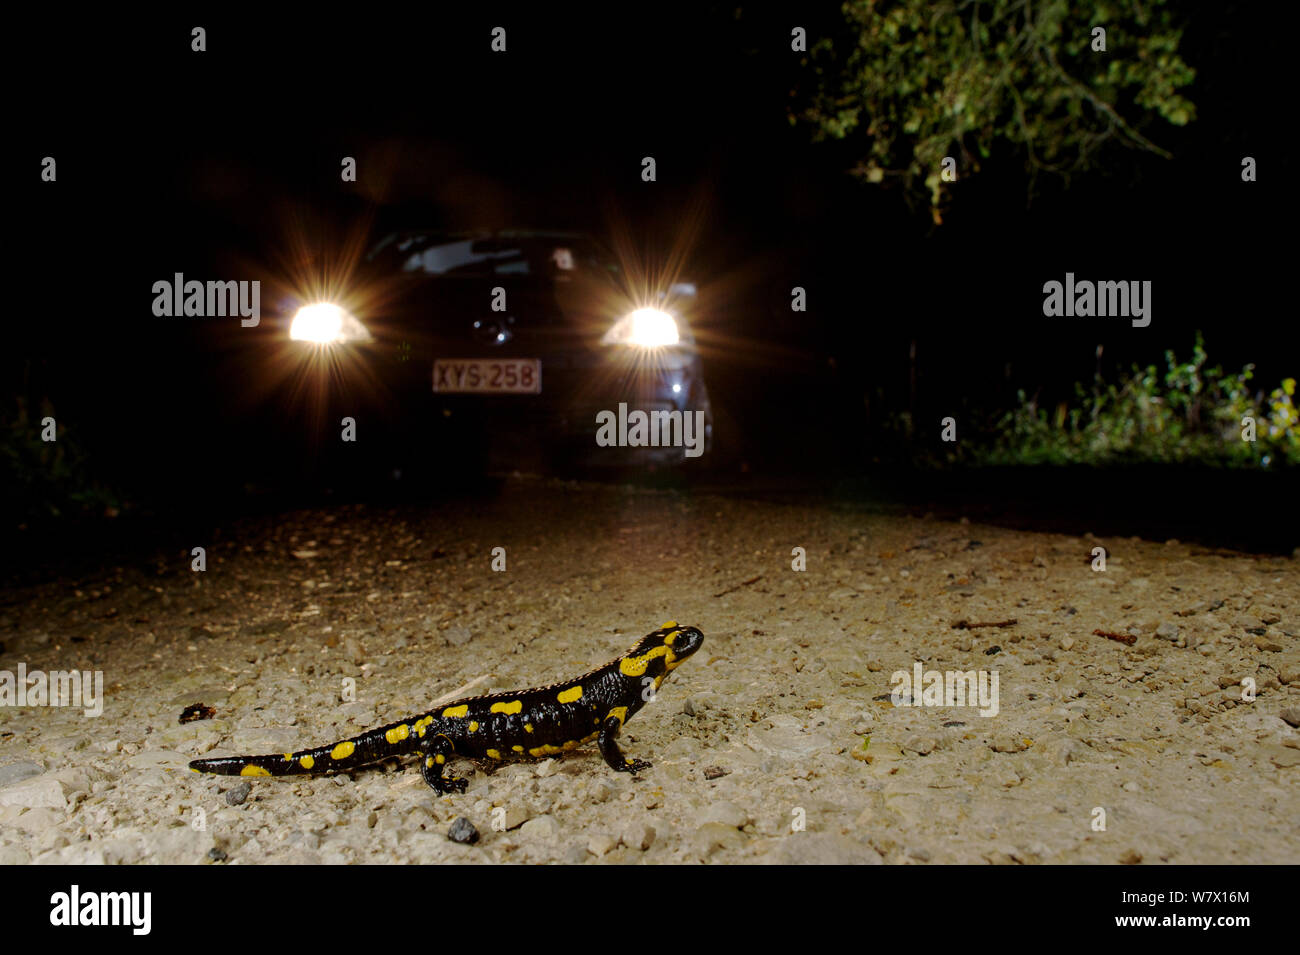 Fire Salamander (Salamandra salamandra) crossing the road with car approaching. France. November 2012 Stock Photo